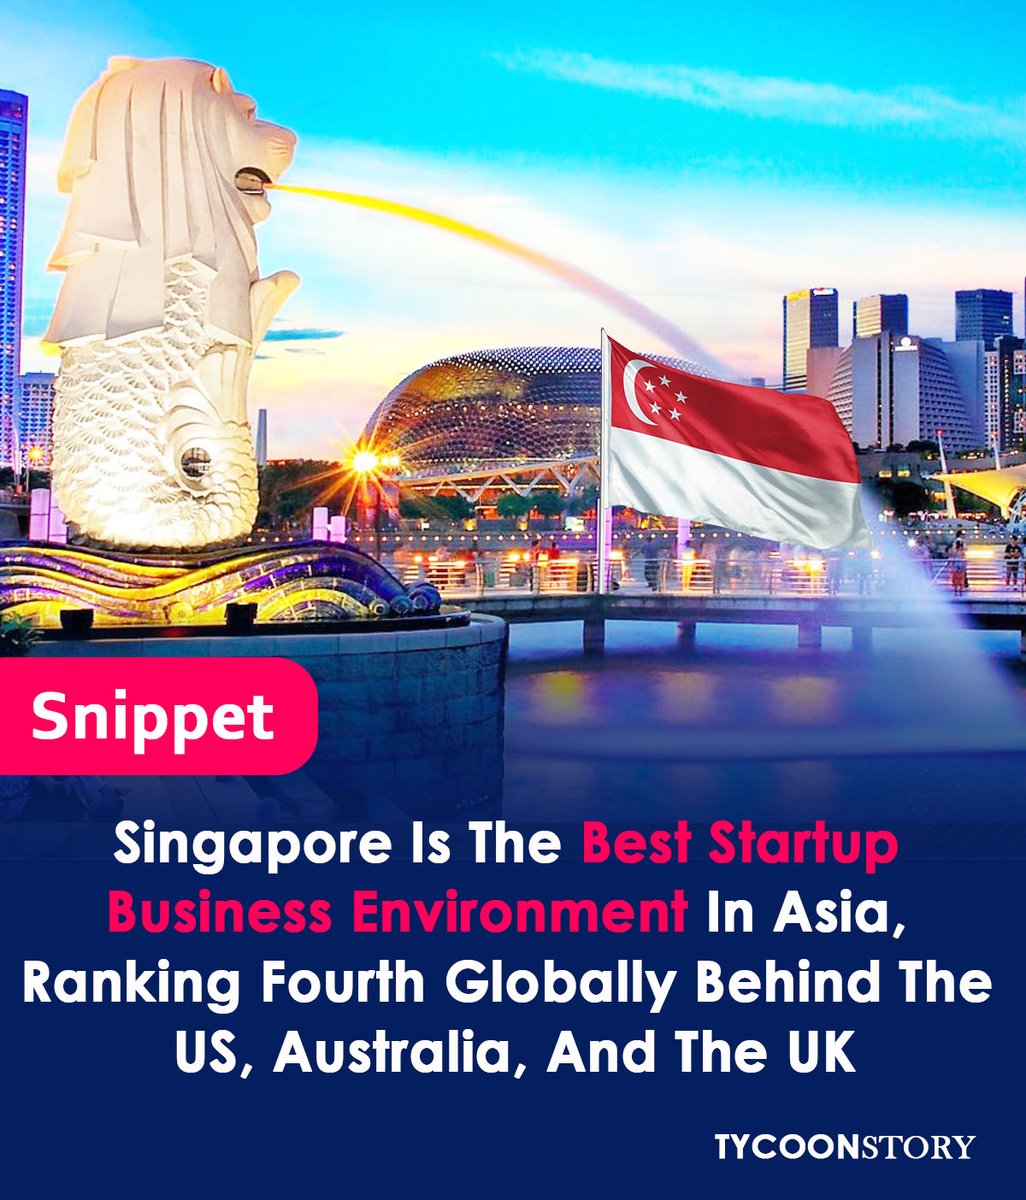 Singapore ranks 4th globally for best startup business environment, after US, Australia, and UK.

#startup #economy #business #SingaporeStartup #asiastartup #Innovation #entrepreneurship #AngelInvestment #Transportation #venturecapital #EconomicGrowth #startupblink